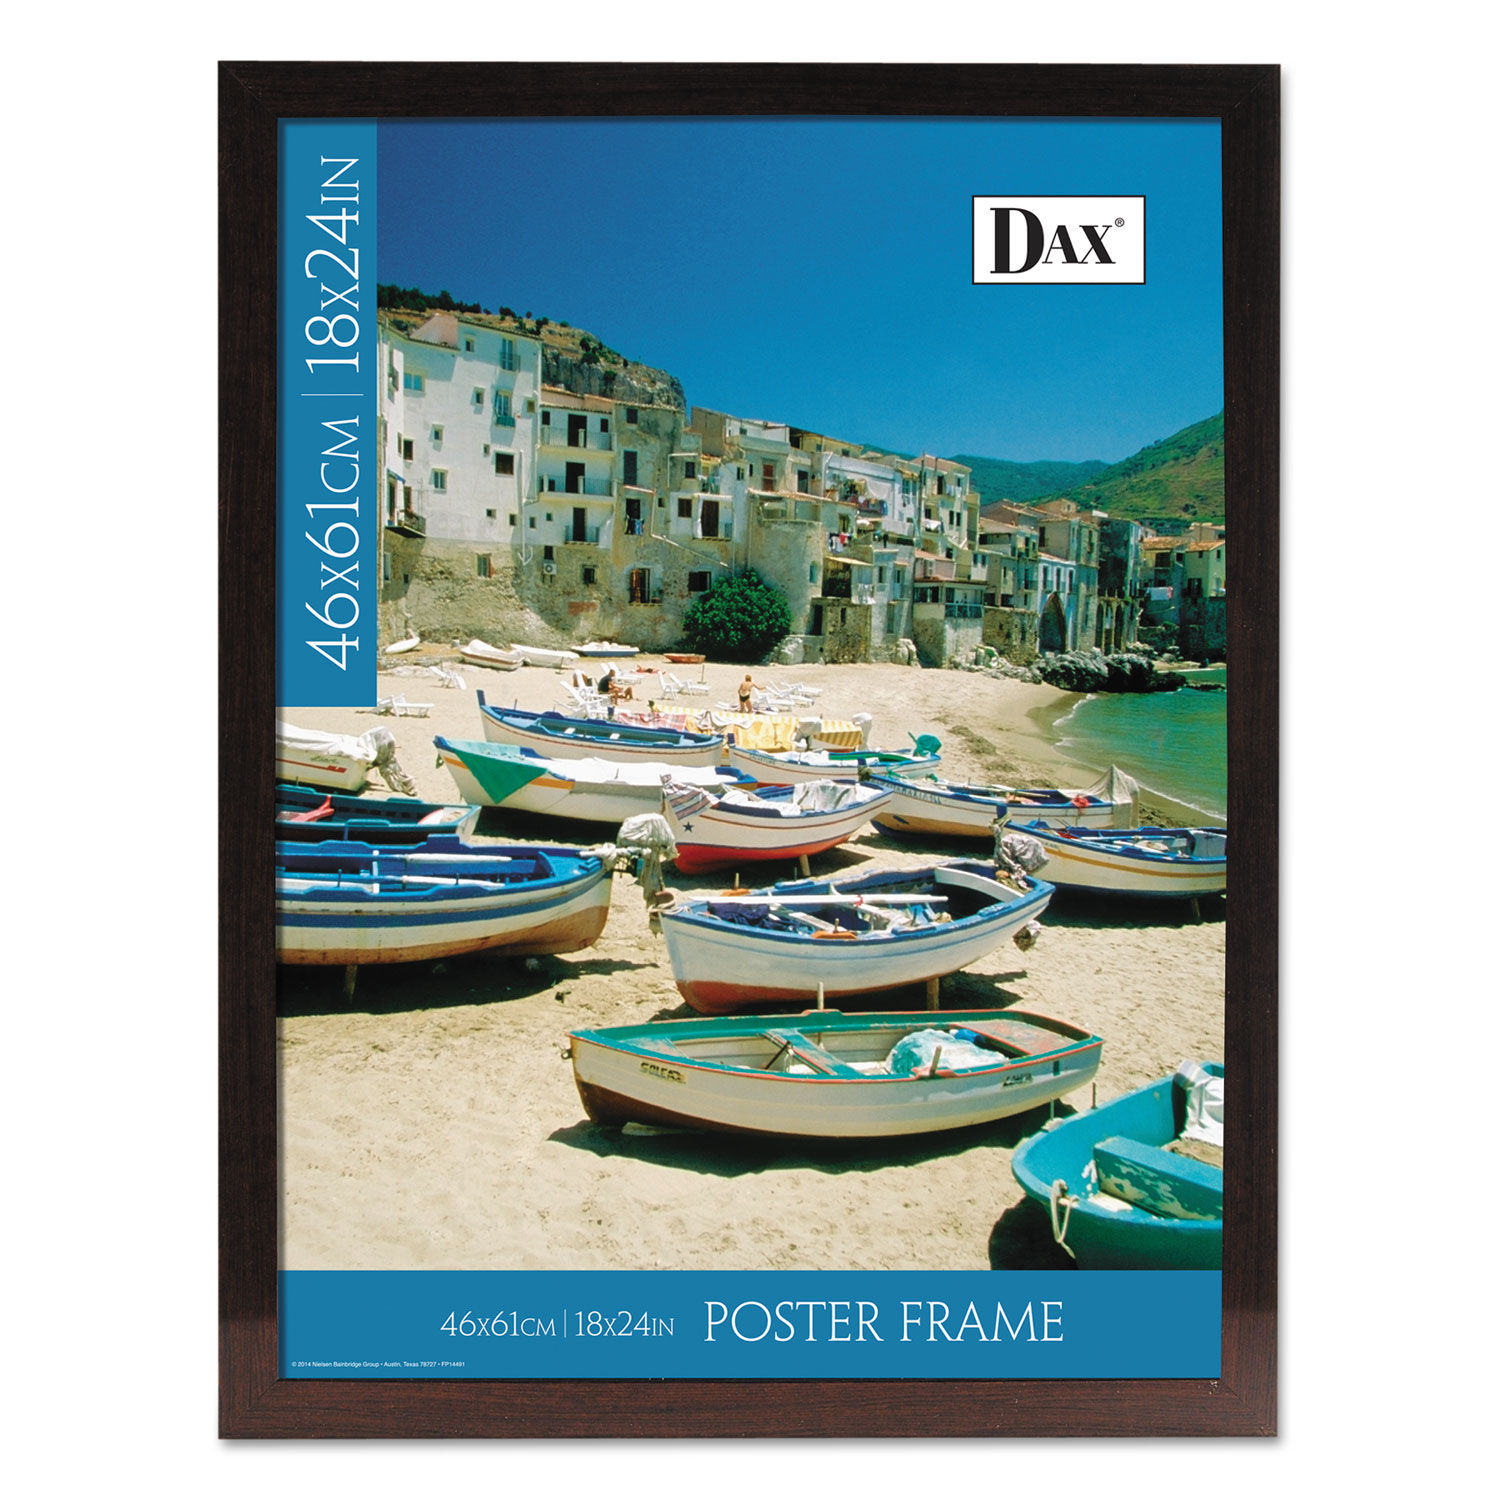 dax poster frame